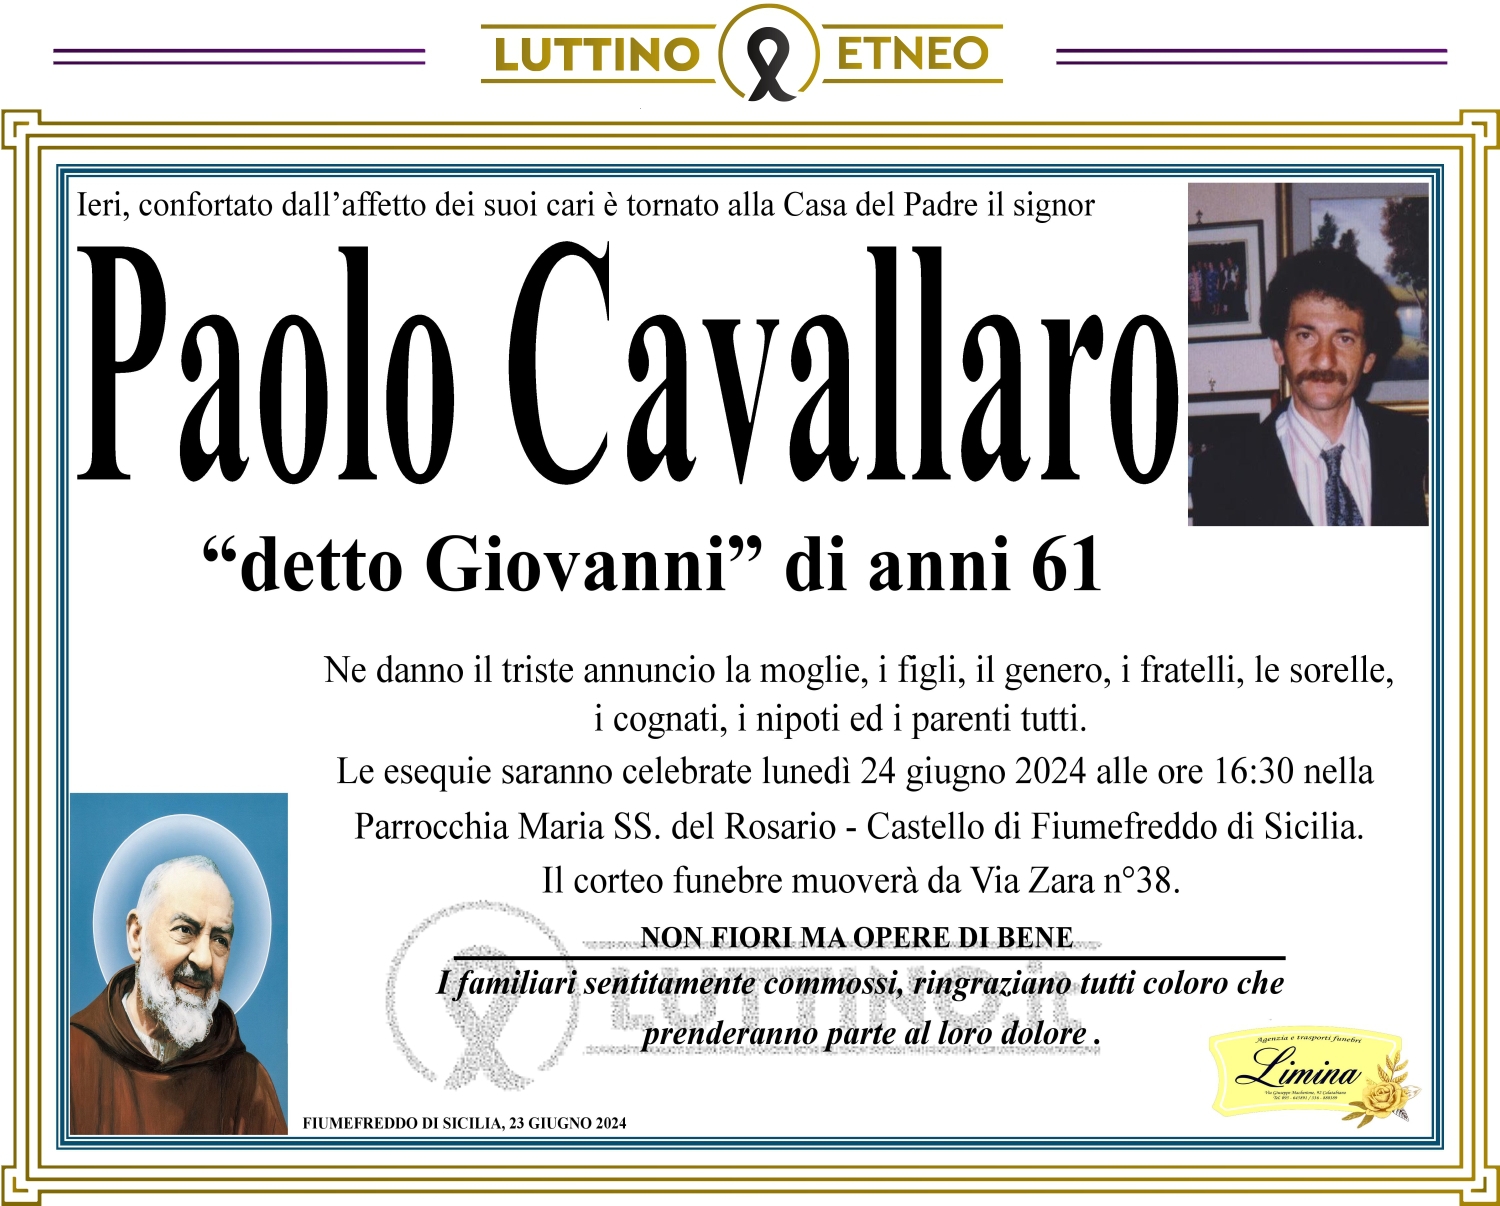 Paolo Cavallaro